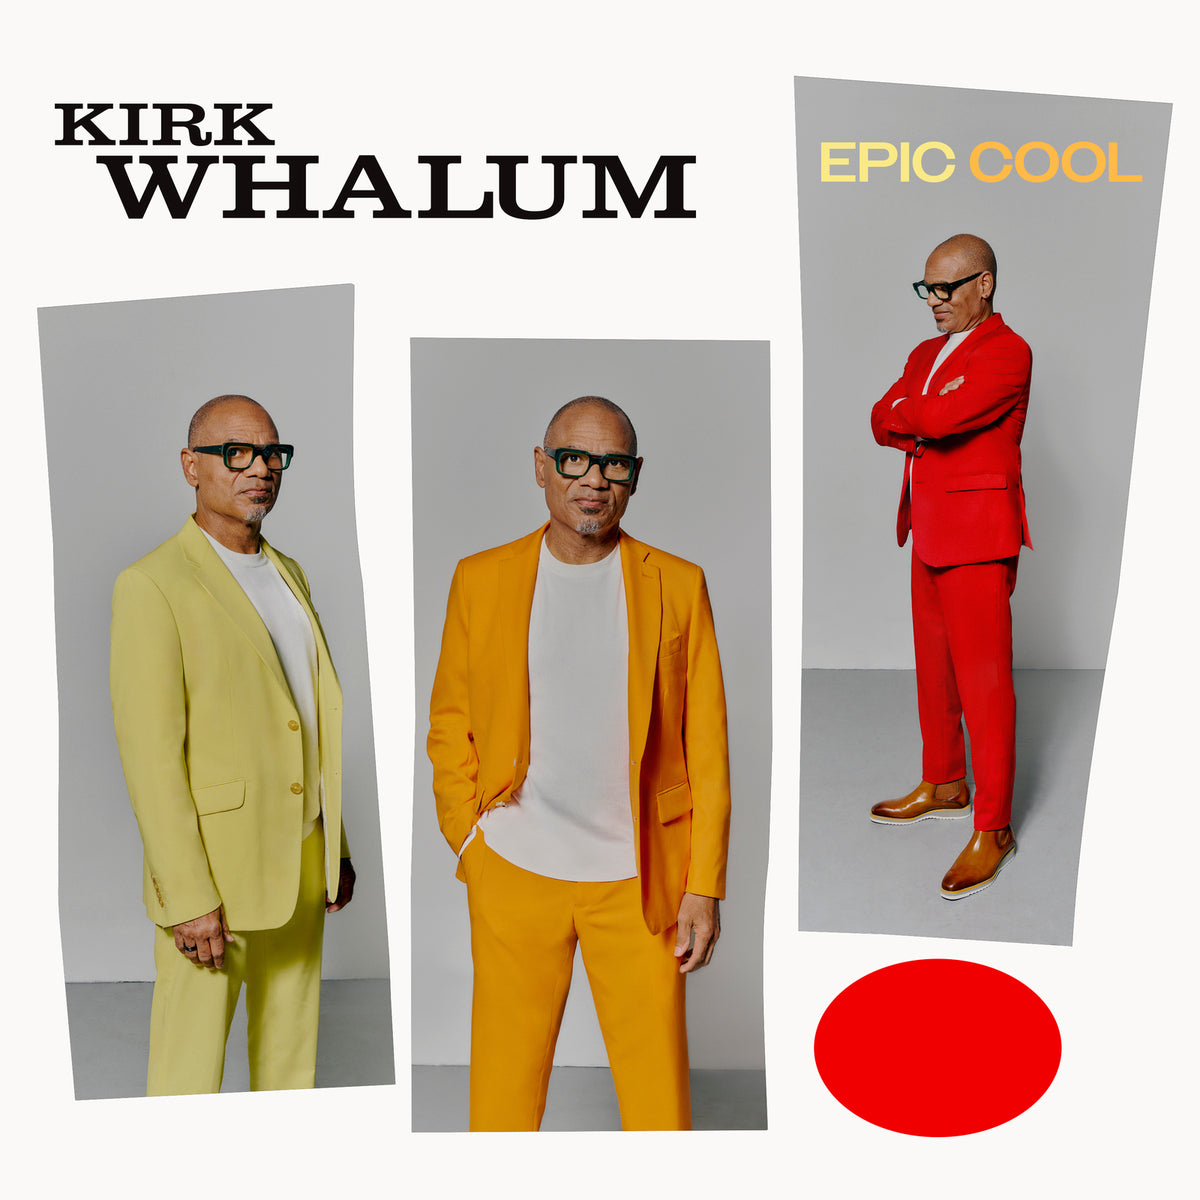 Kirk Whalum - Epic Cool - ART7084